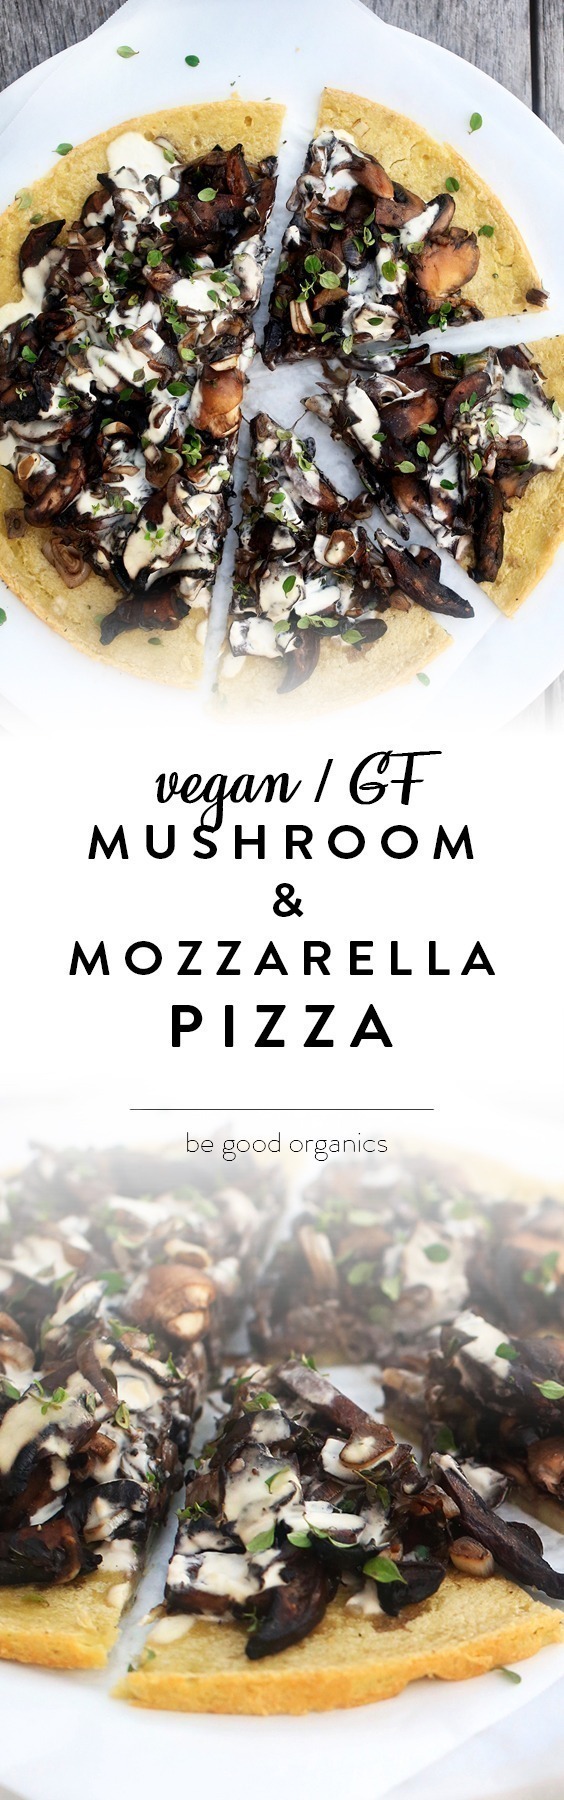 The most delicious Vegan and Gluten Free MUSHROOM AND MOZZARELLA PIZZA #healthy #recipe #begoodorganics #plantbased #wholefoods